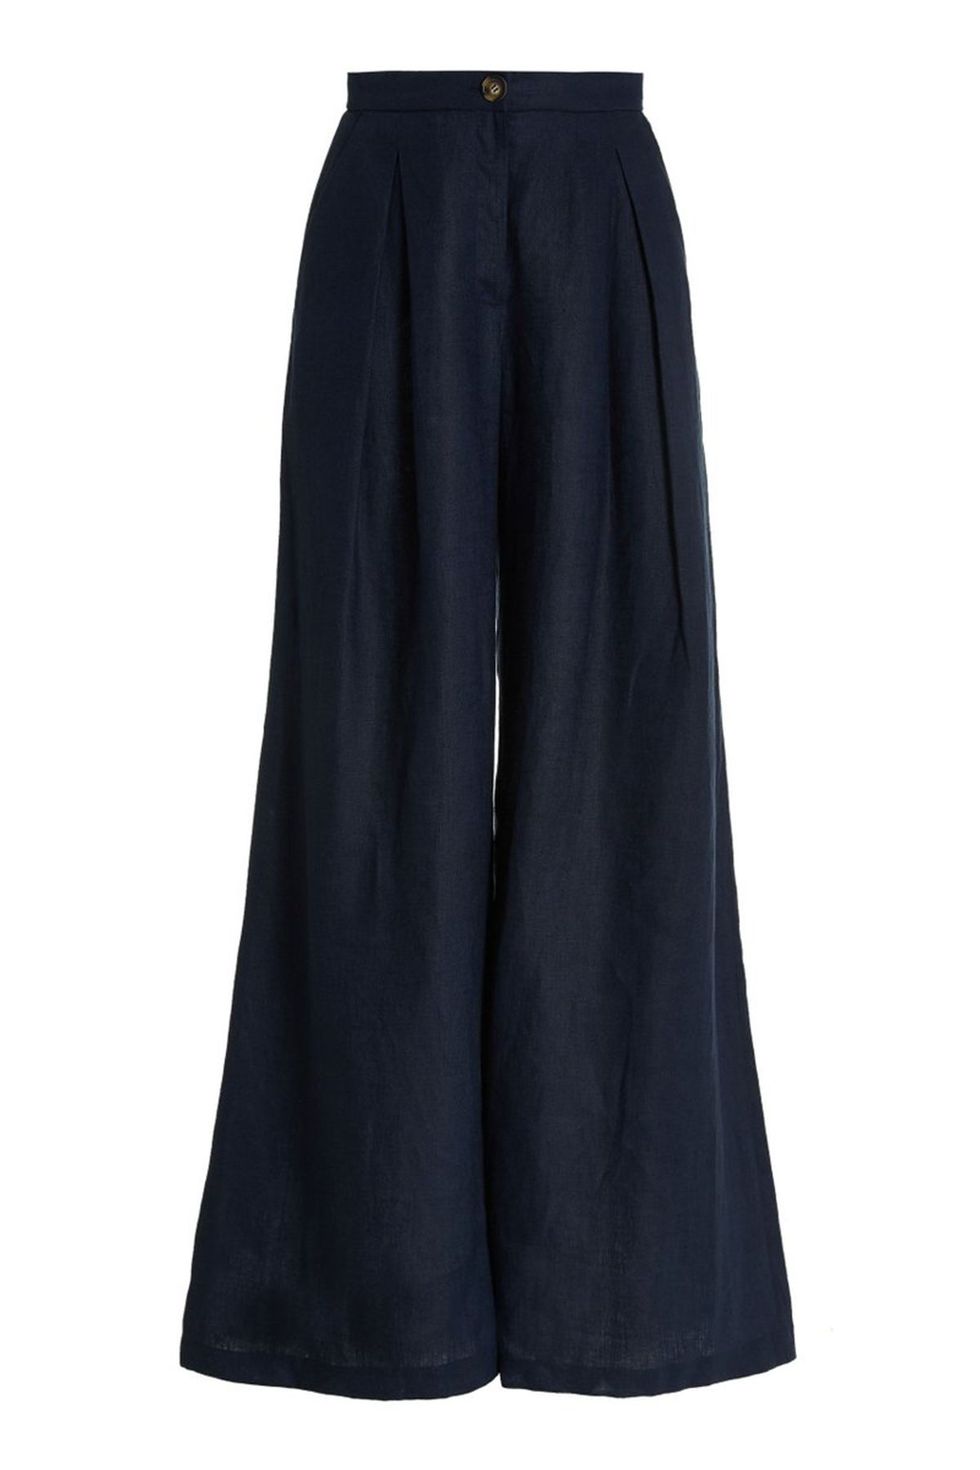 15 Best Linen Pants for Women 2023 - Stylish Linen Trousers for Spring ...